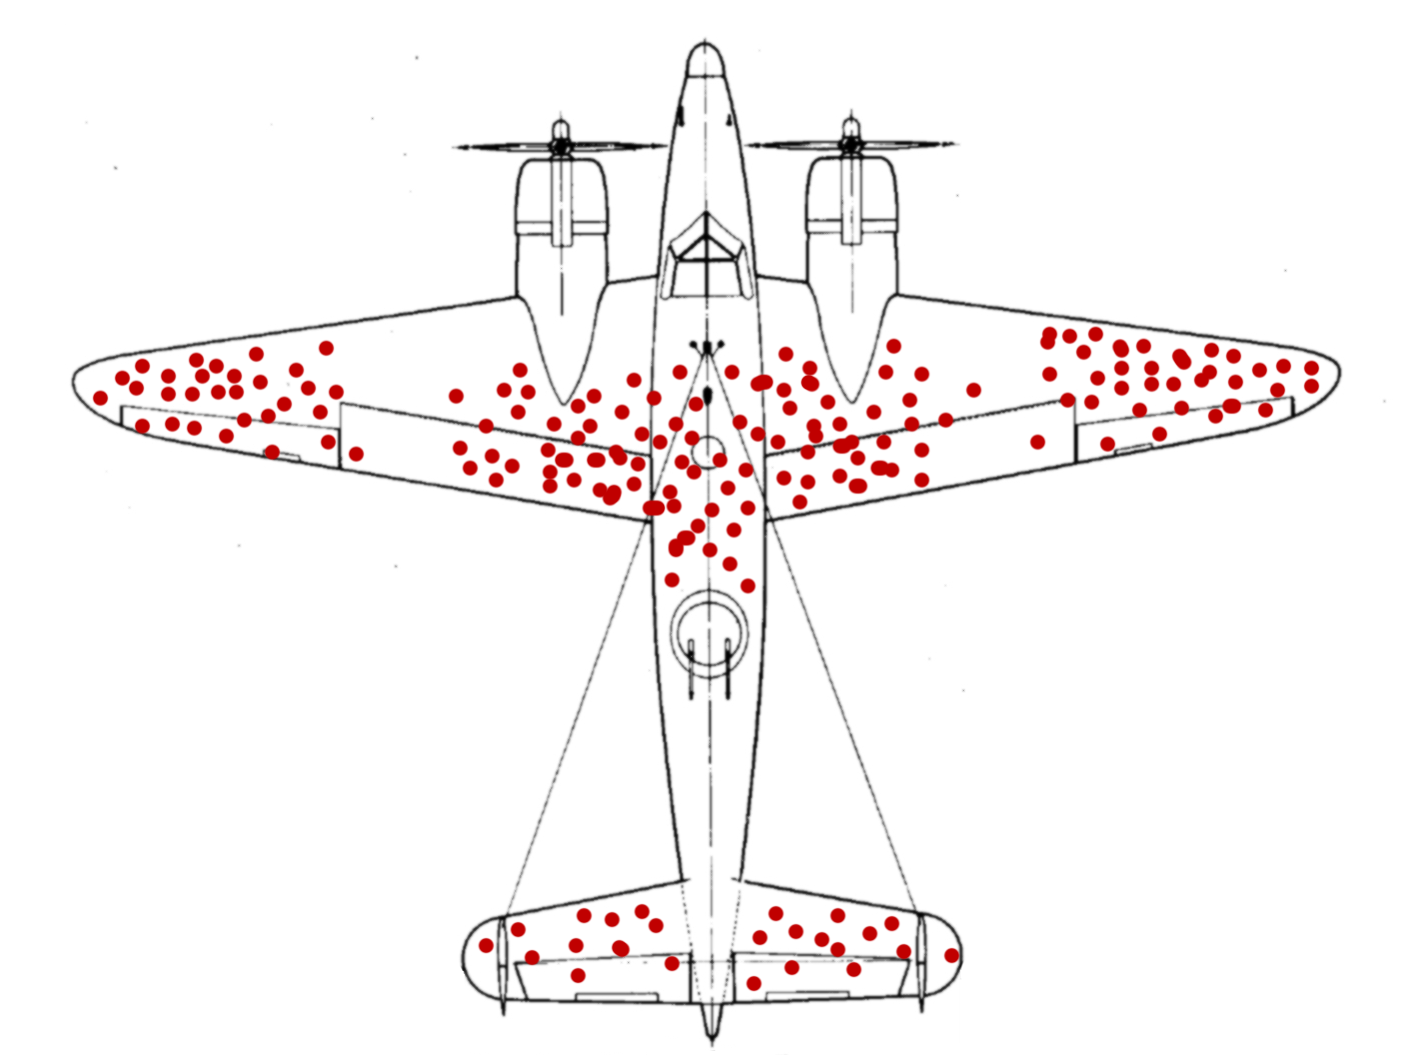 Figure from Wikipedia (“Survivorship Bias” 2020).